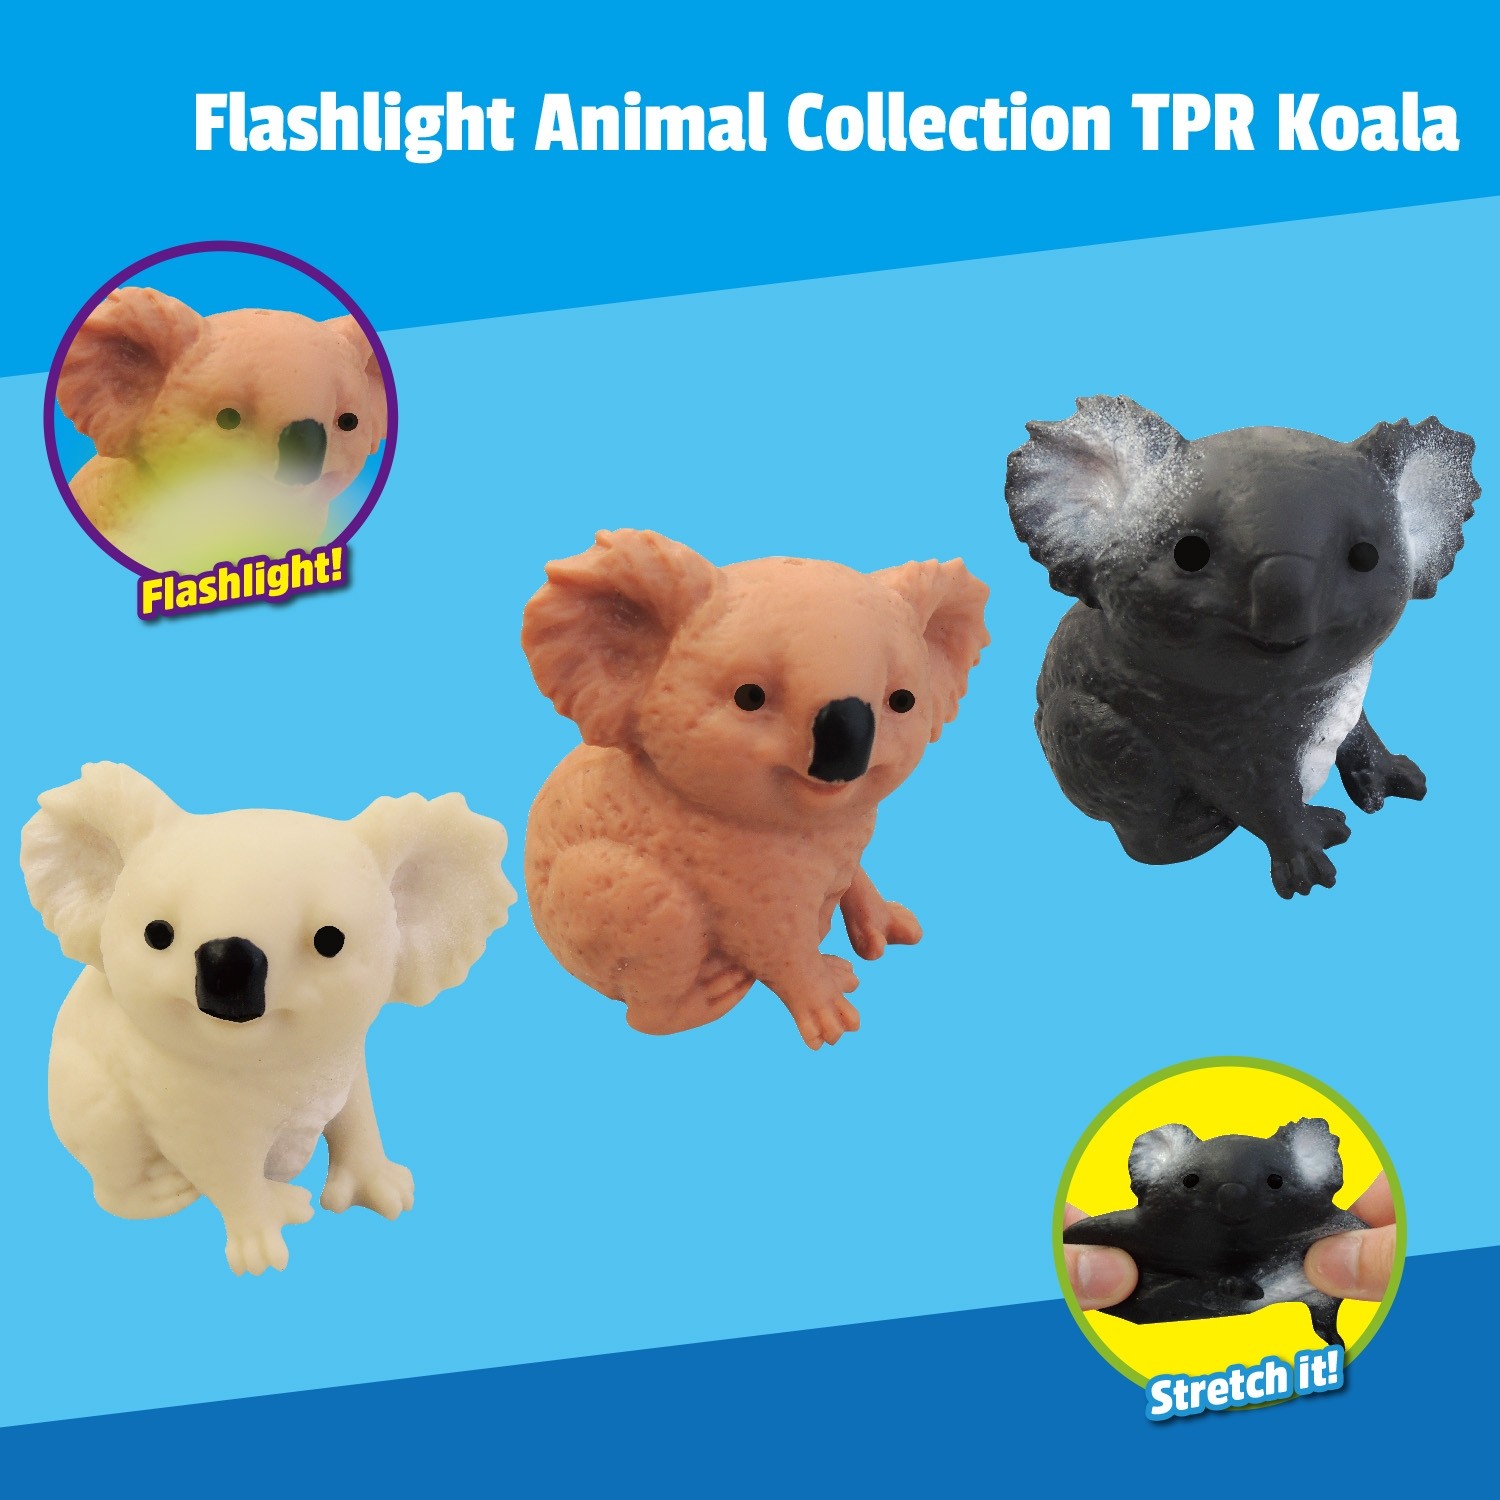 "Flashlight Animal Collection" TPR Koala